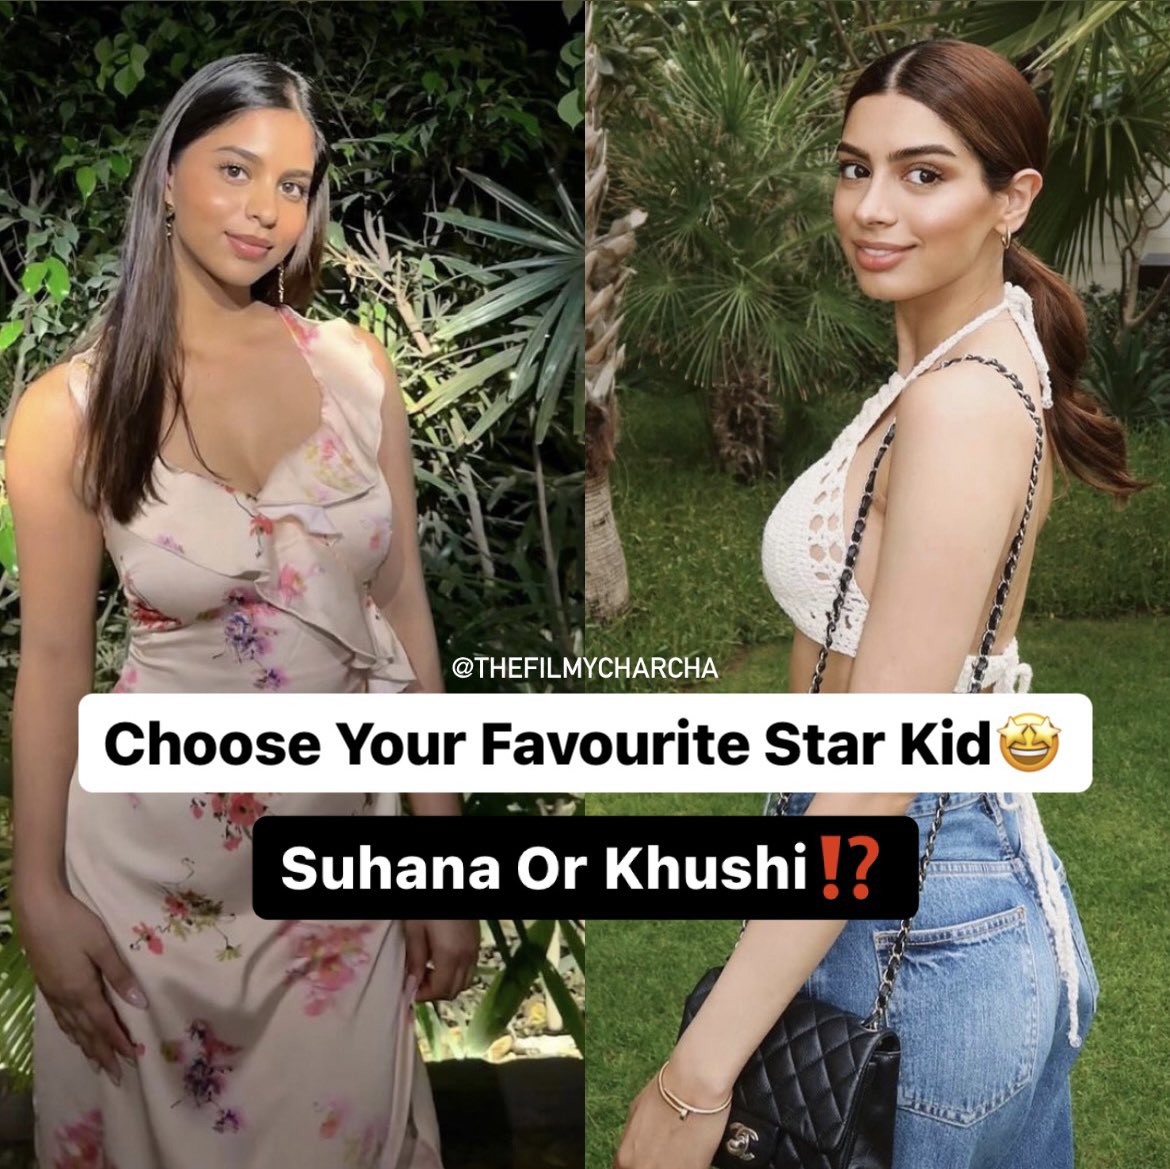 Choose Your Favorite Star Kid🤩: Suhana Or Khushi⁉️
Comment down below 
#suhanakhan #khushikapoor #bollywood #trending #bollywoodfashion